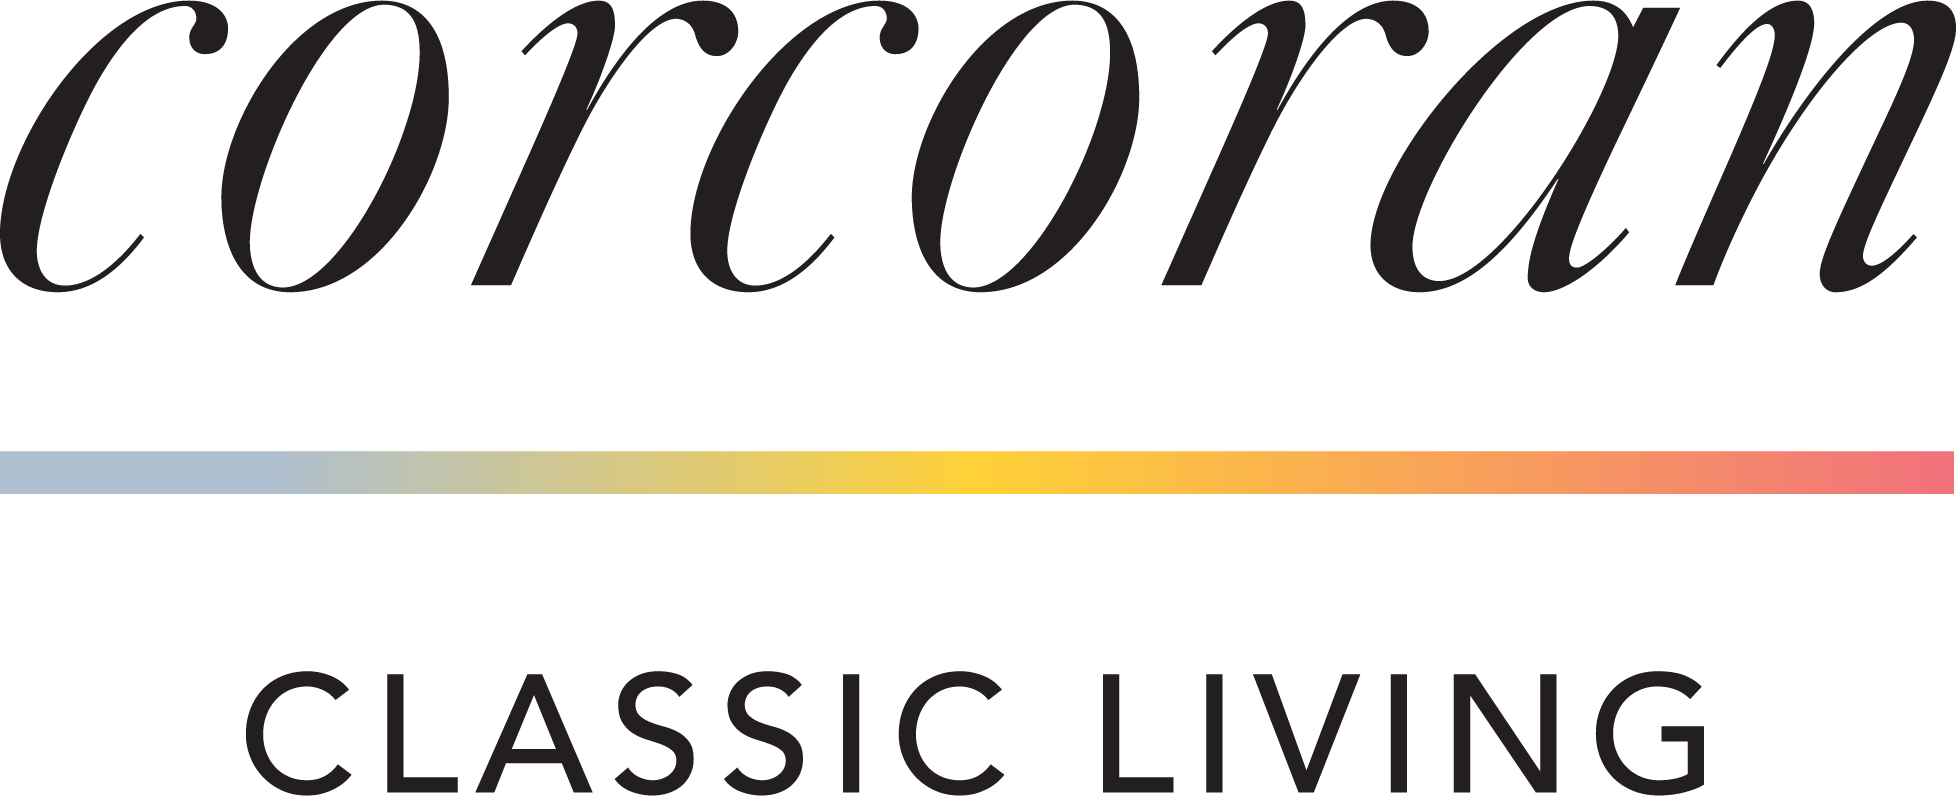 Corcoran Classic Living logo